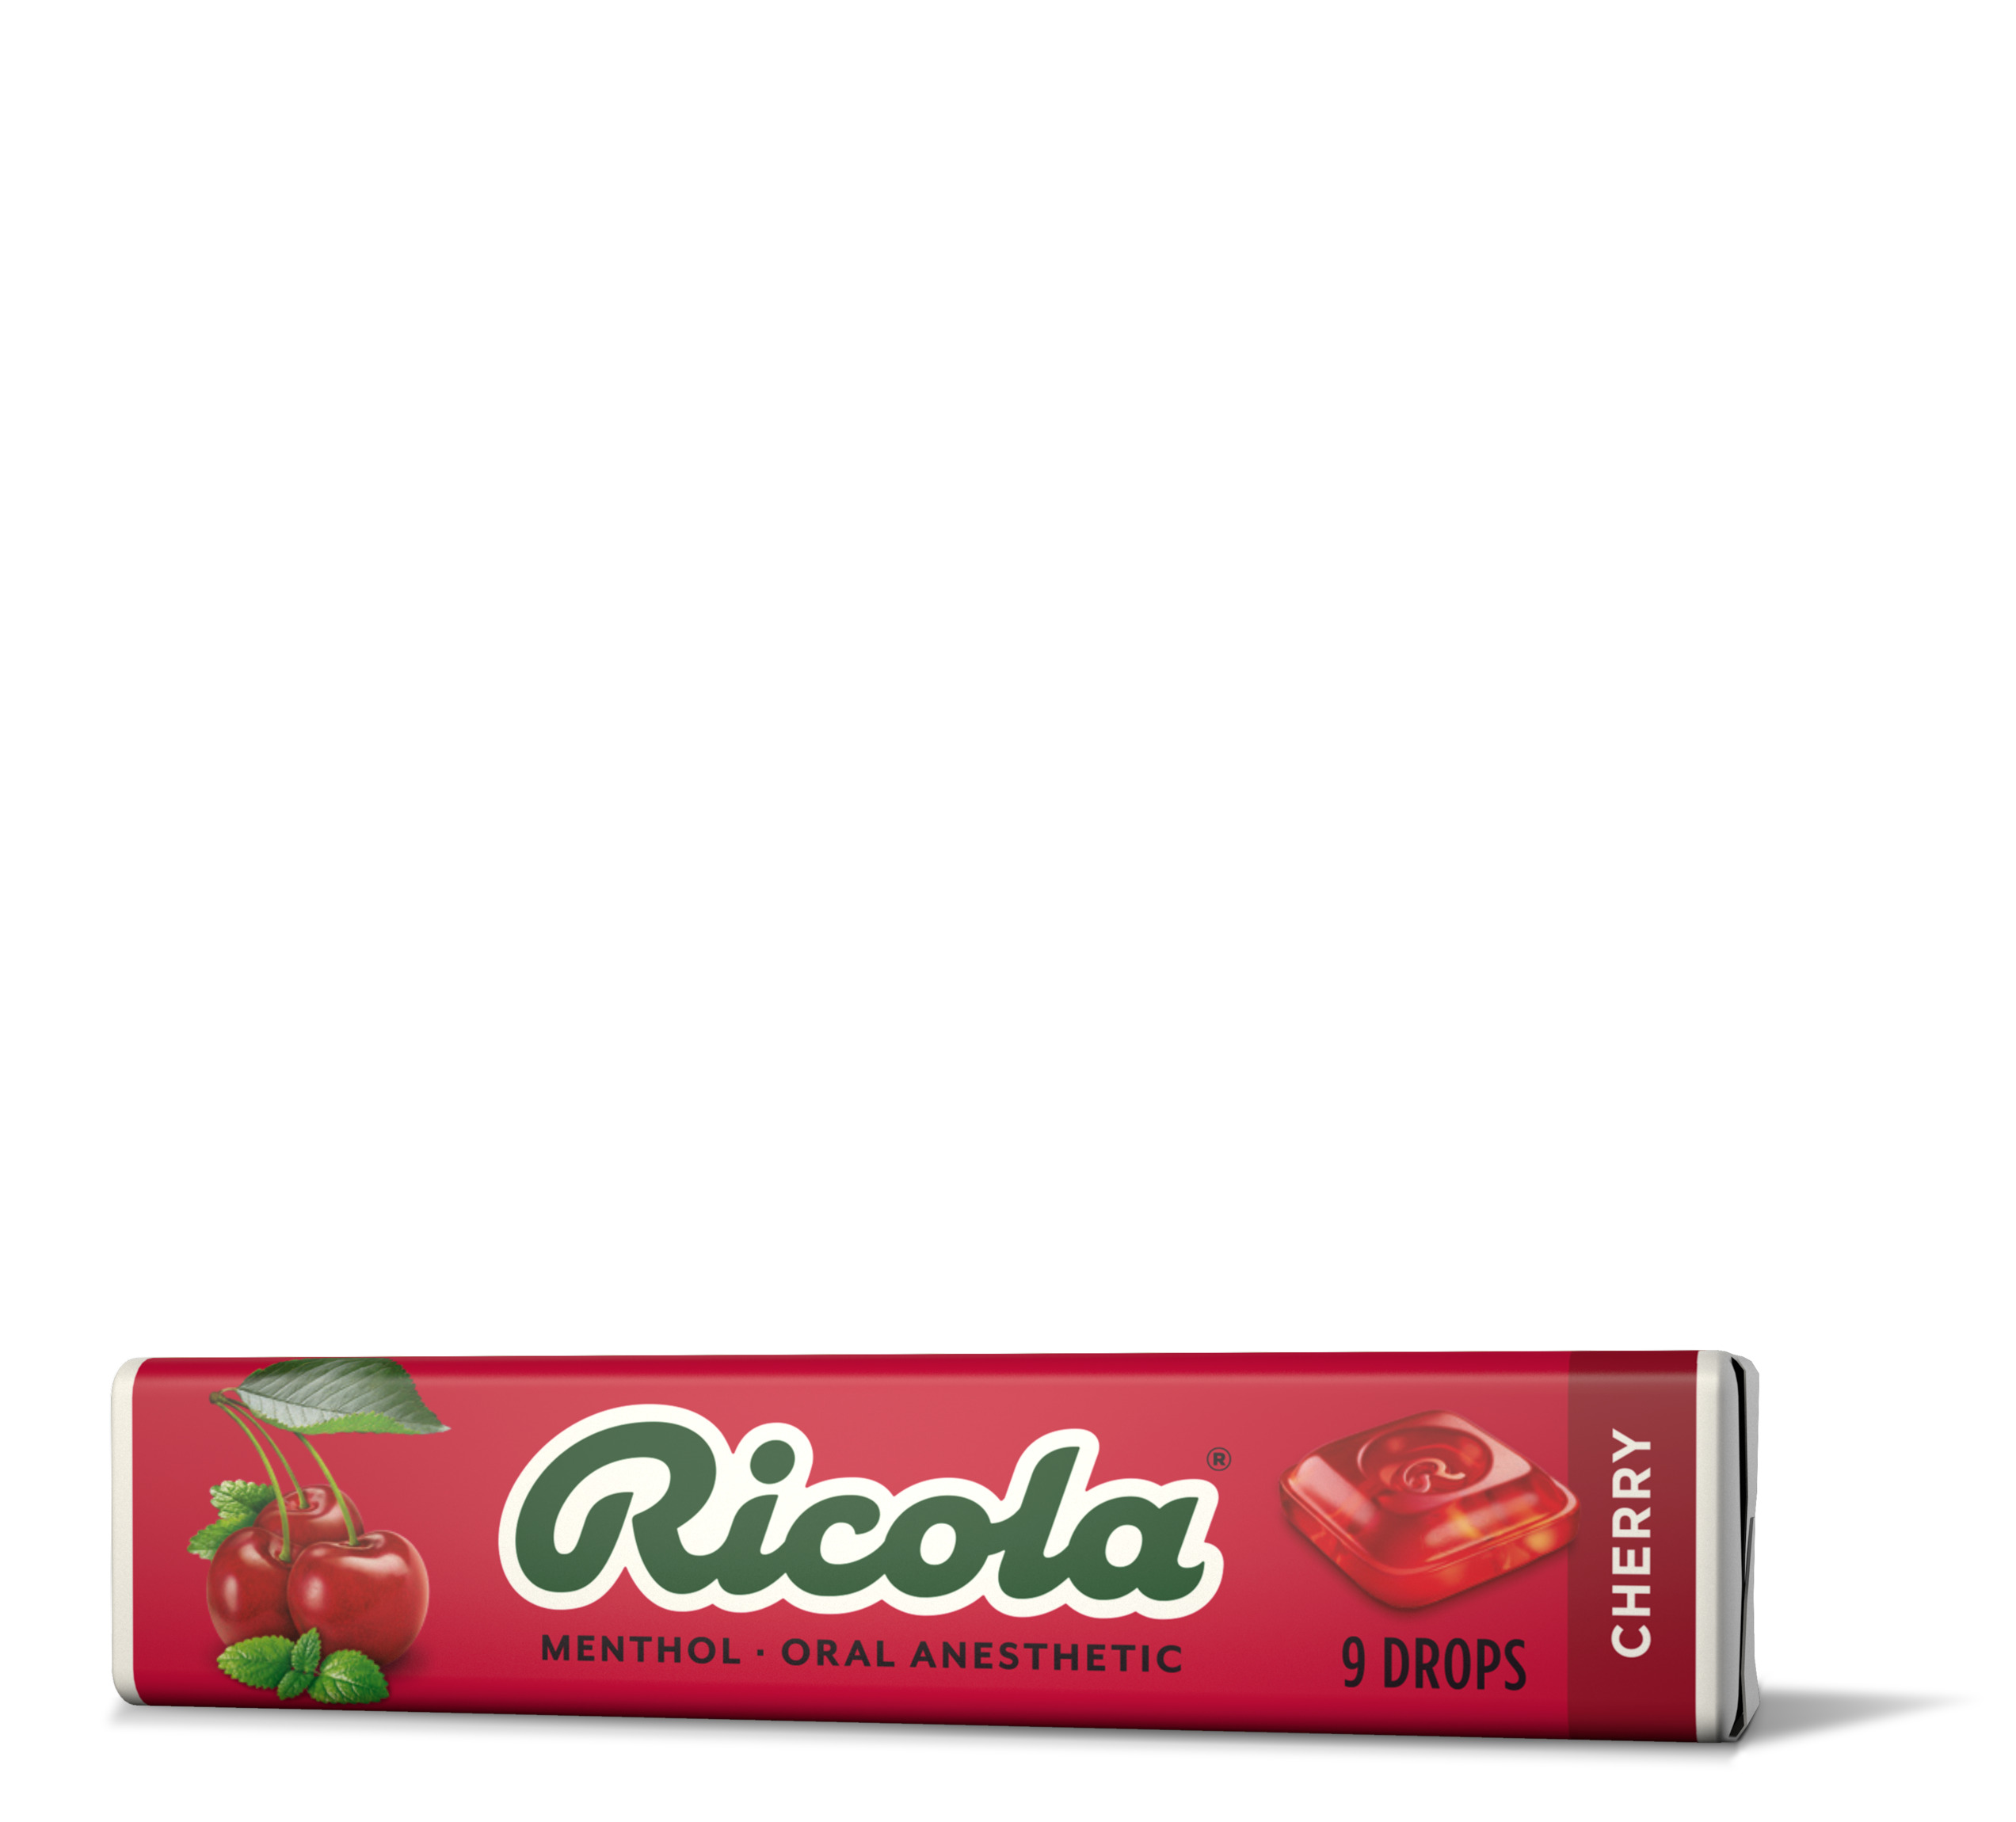 Ricola Cough Drops Sugar Free Swiss Herb, 19 Count – CoCo Island Mart